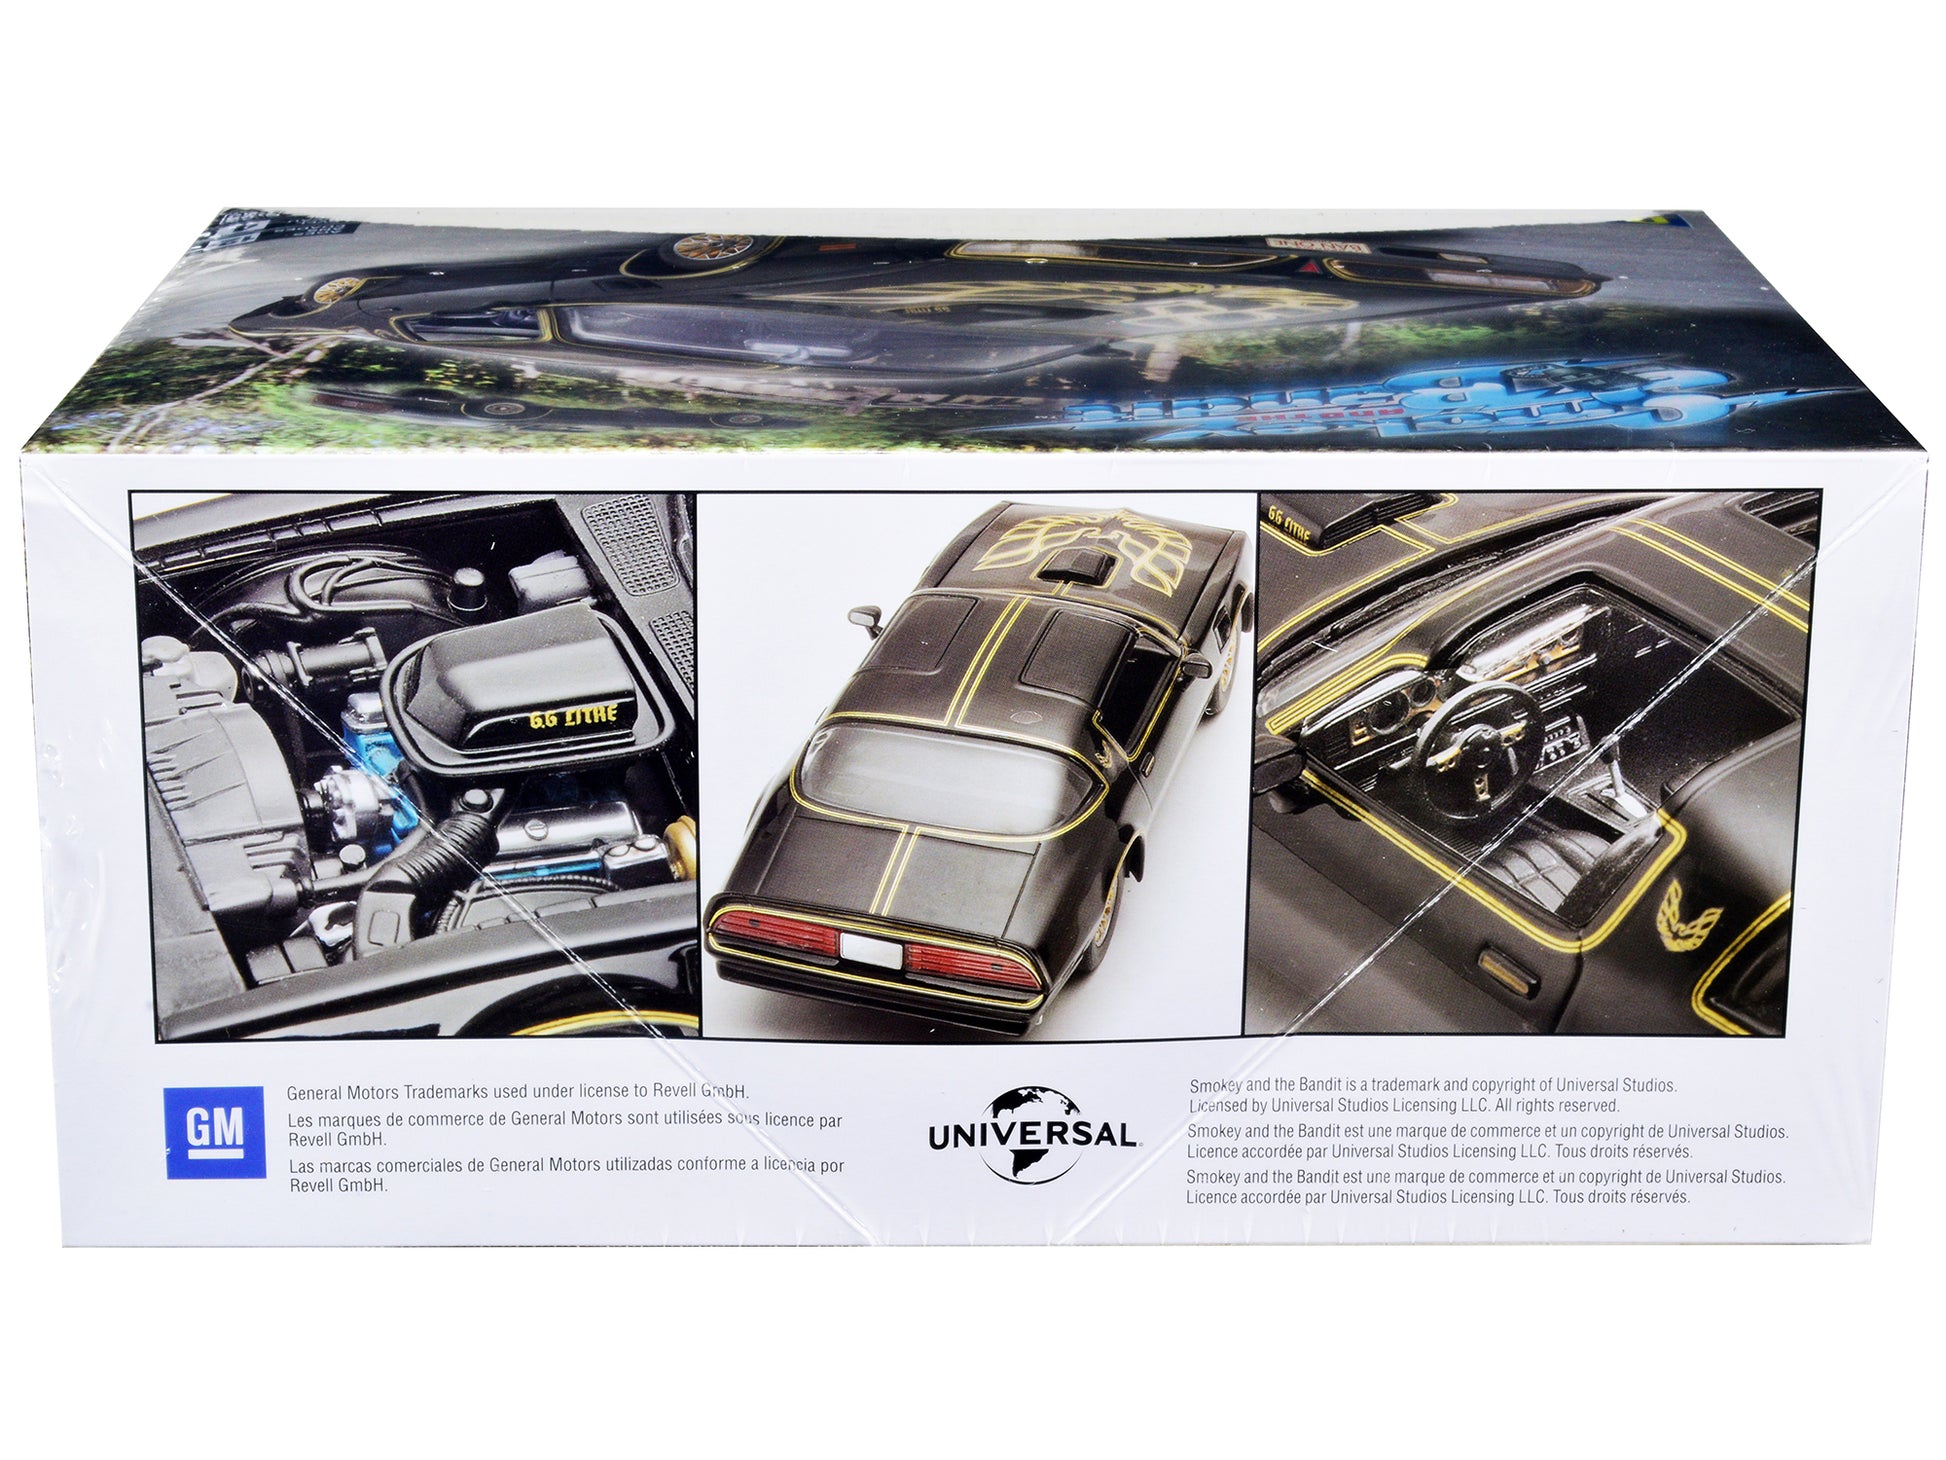 level model kit 1977 pontiac firebird smokey and the bandit movie 1/25 scale car